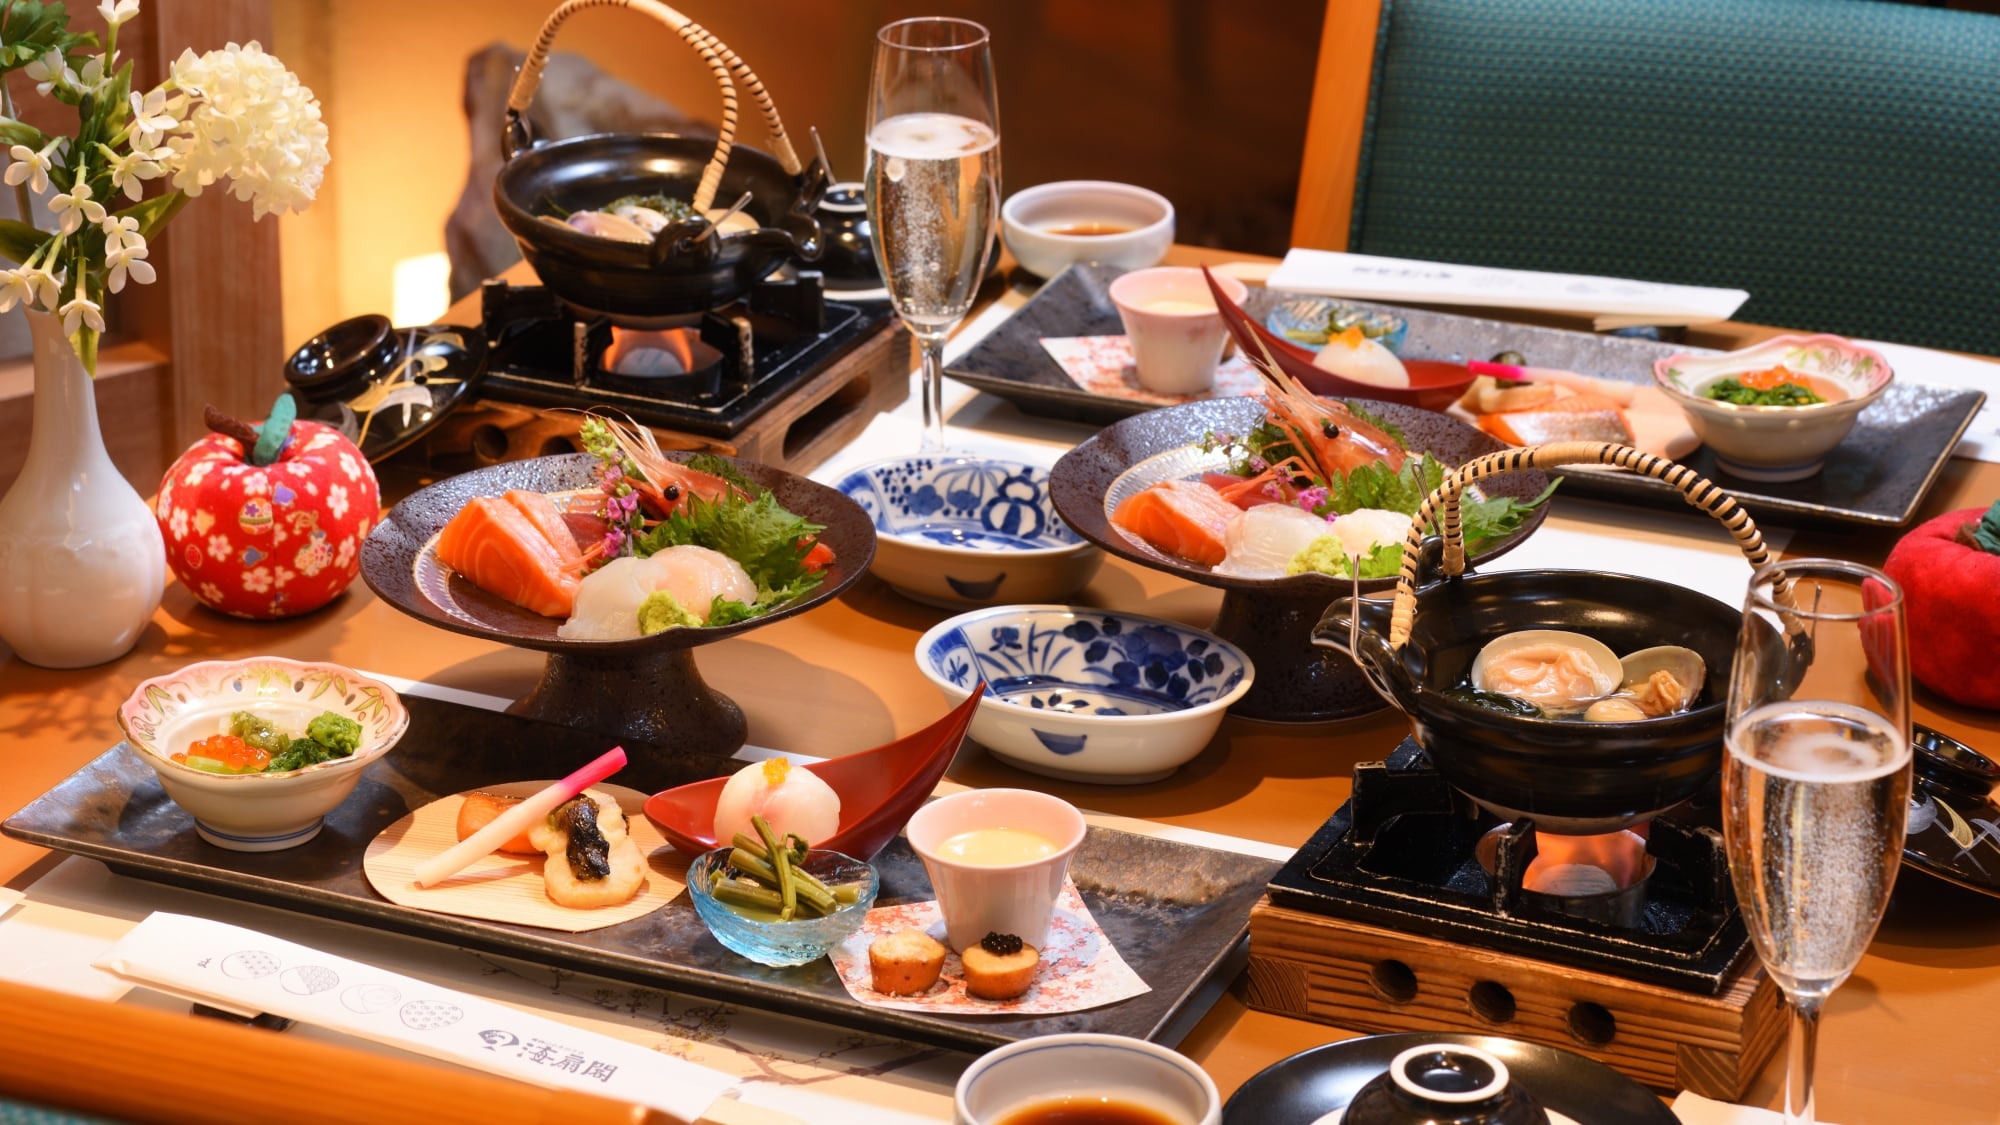 Dining An example of "Kaitsuji" cuisine